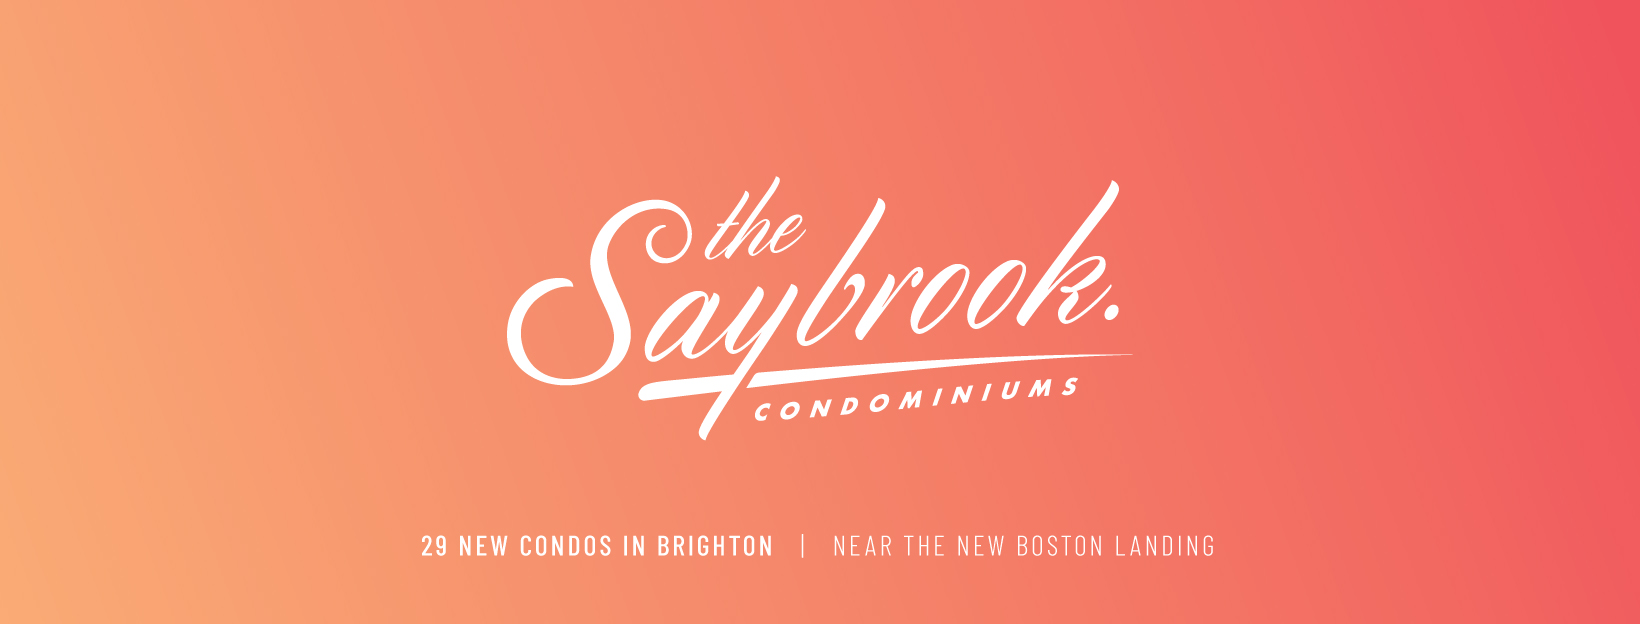 Introducing The Saybrook Condominiums | New Construction in Brighton